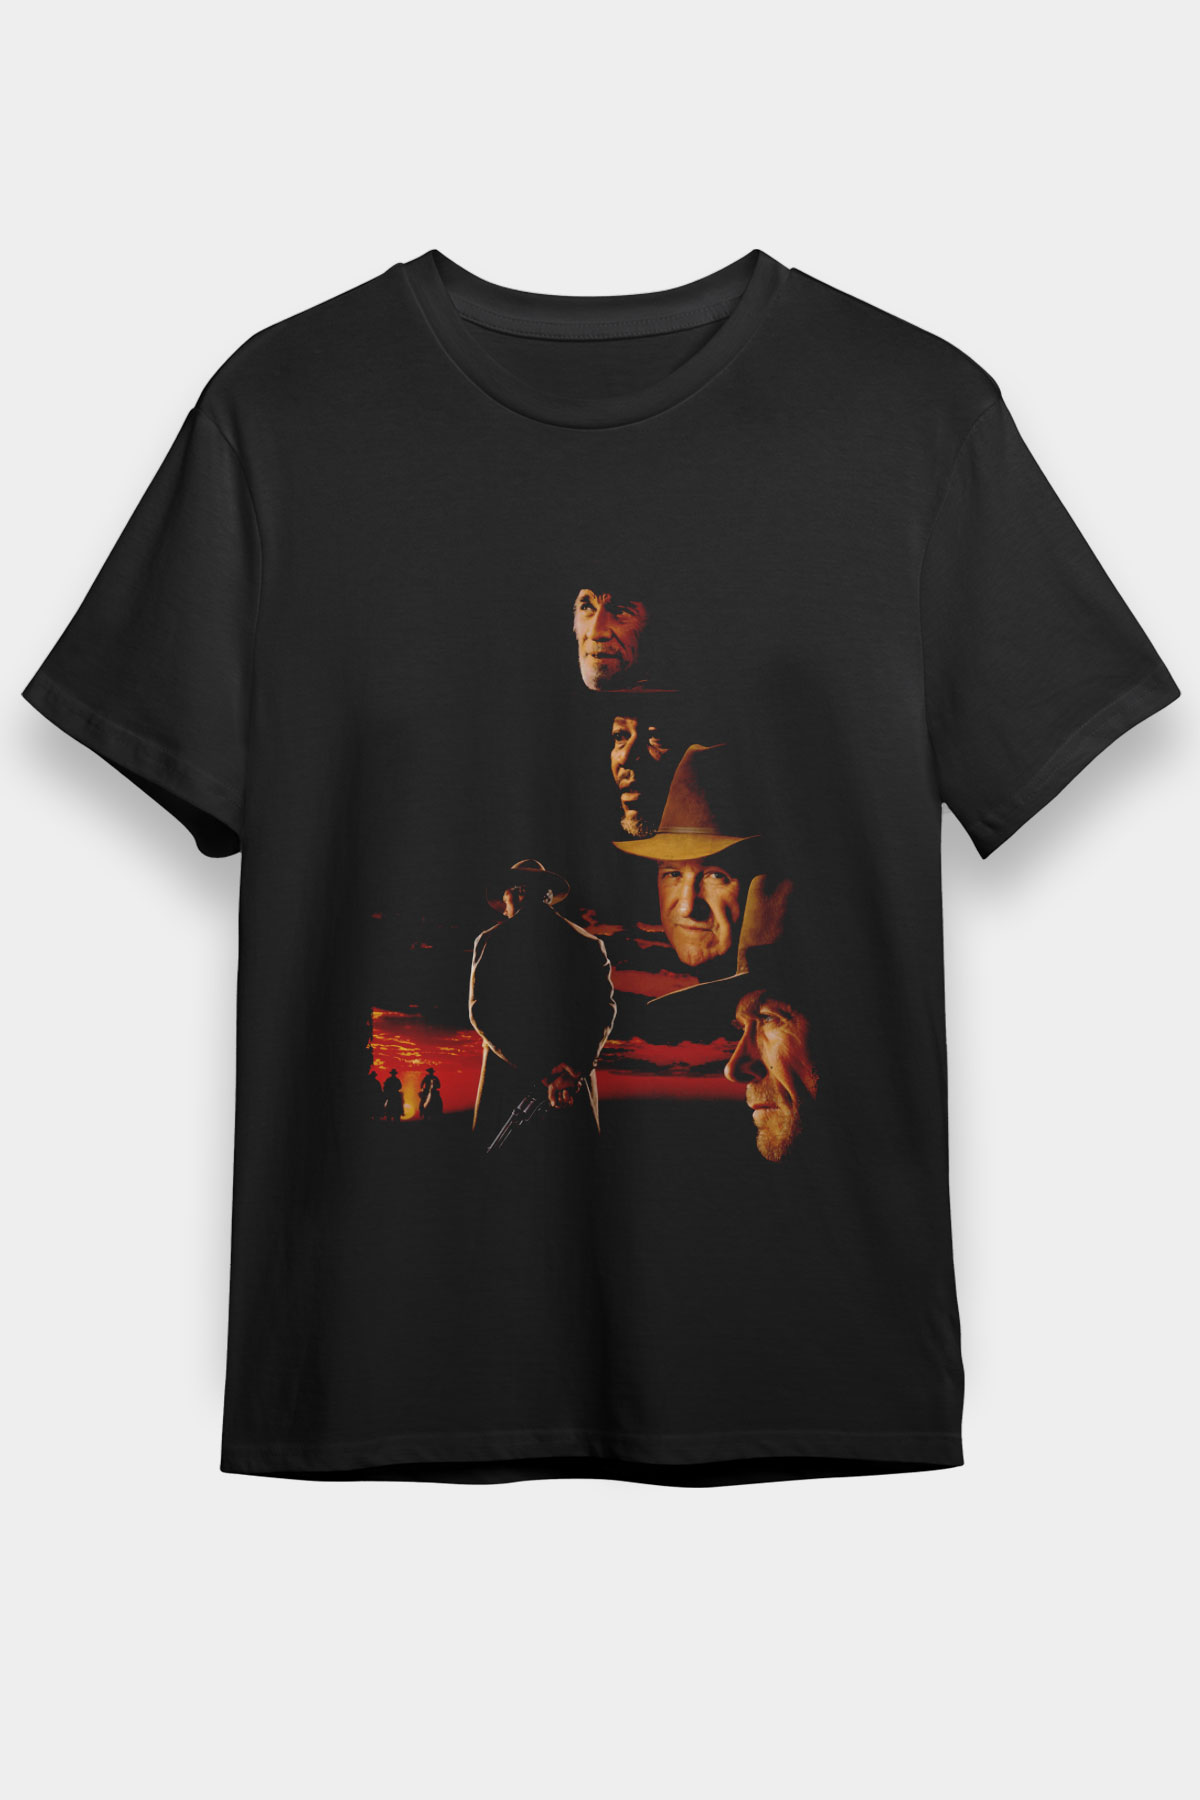 Unforgiven T shirt,Movie , Tv and Games Tshirt /